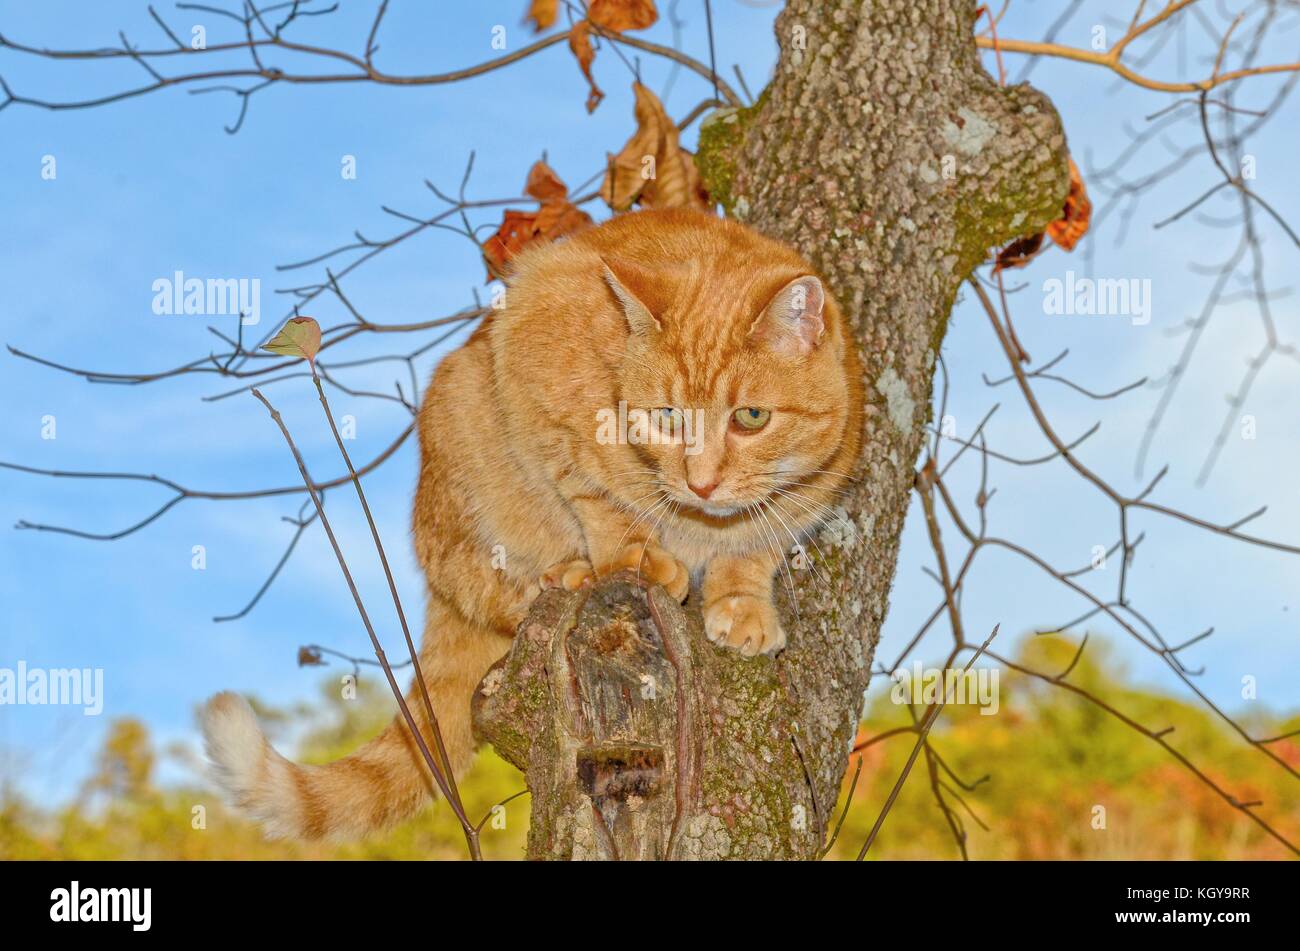 Orange Tabby Cat High in a Tree Tree Stock Photo